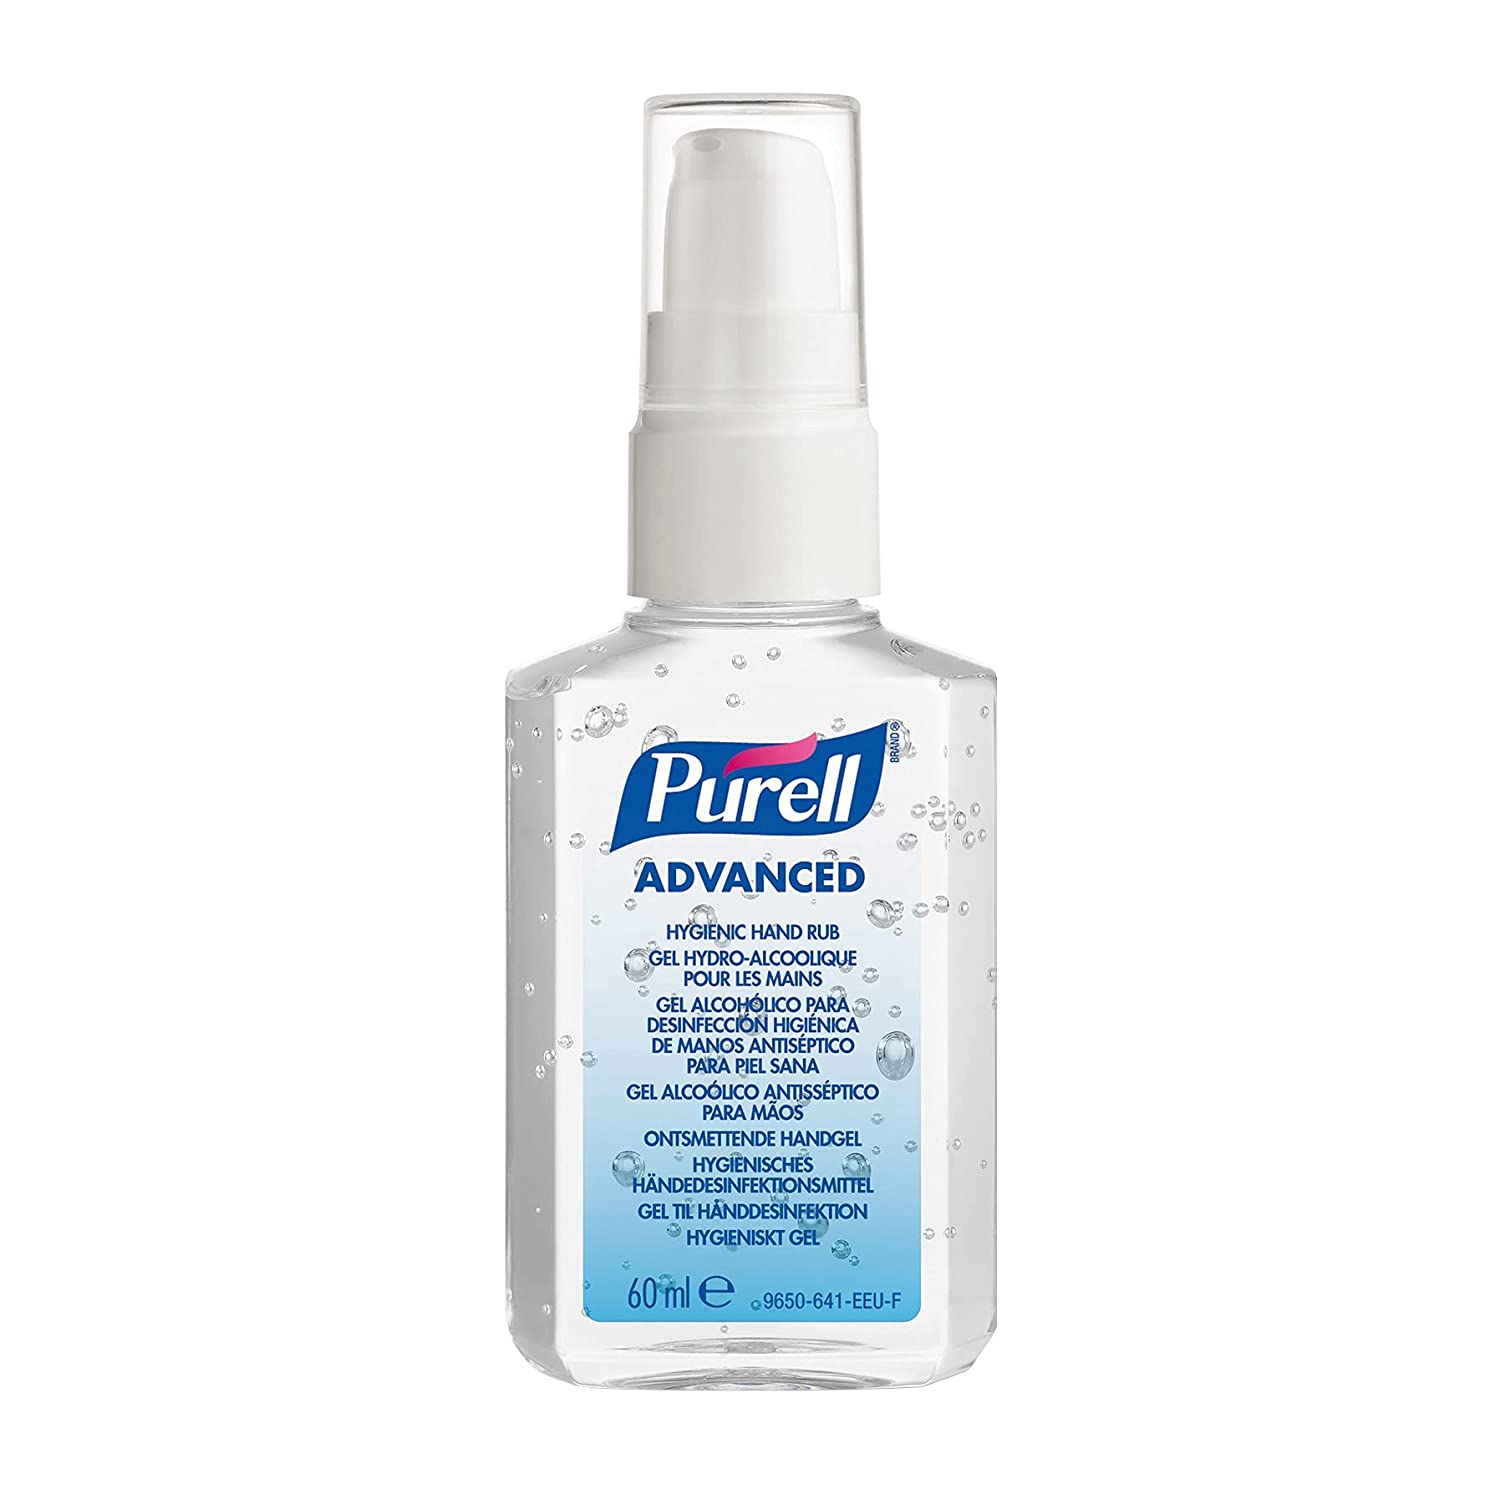 Purell Advanced Hygienic Hand Rub | 60ml | Single